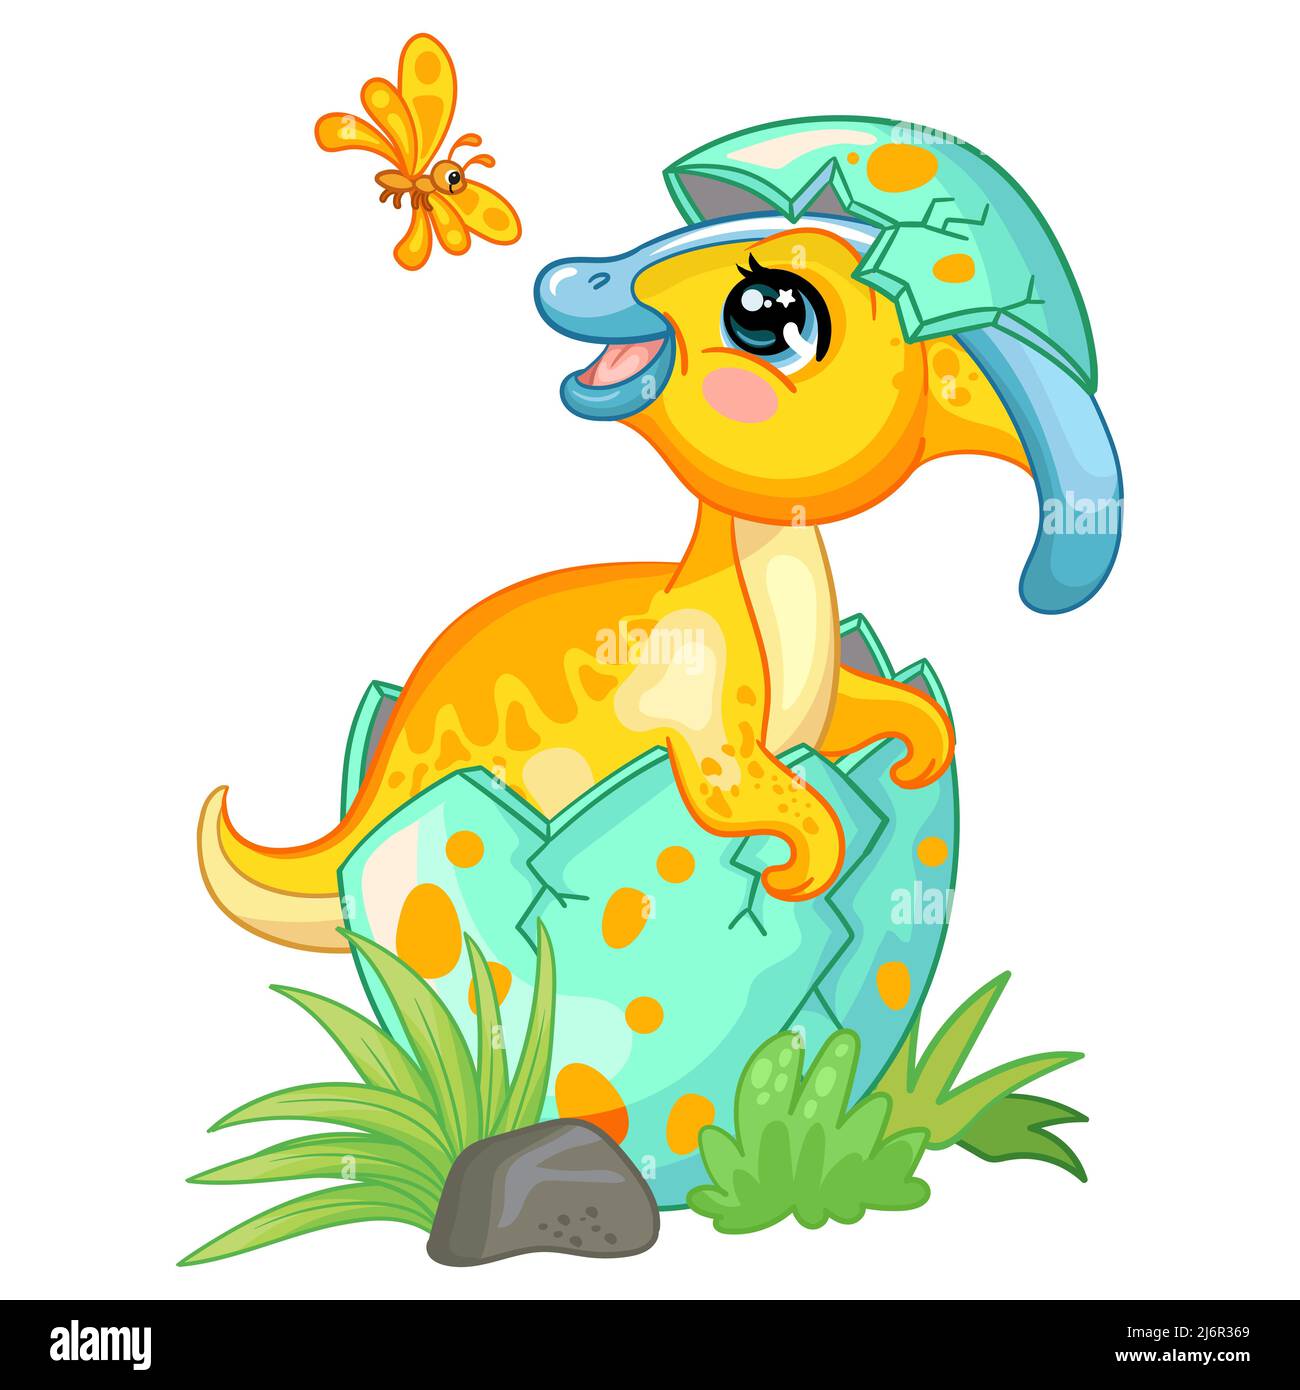 Cute Little Parasaurolophus Dinosaur Cartoon Jumping Stock Illustration -  Download Image Now - iStock